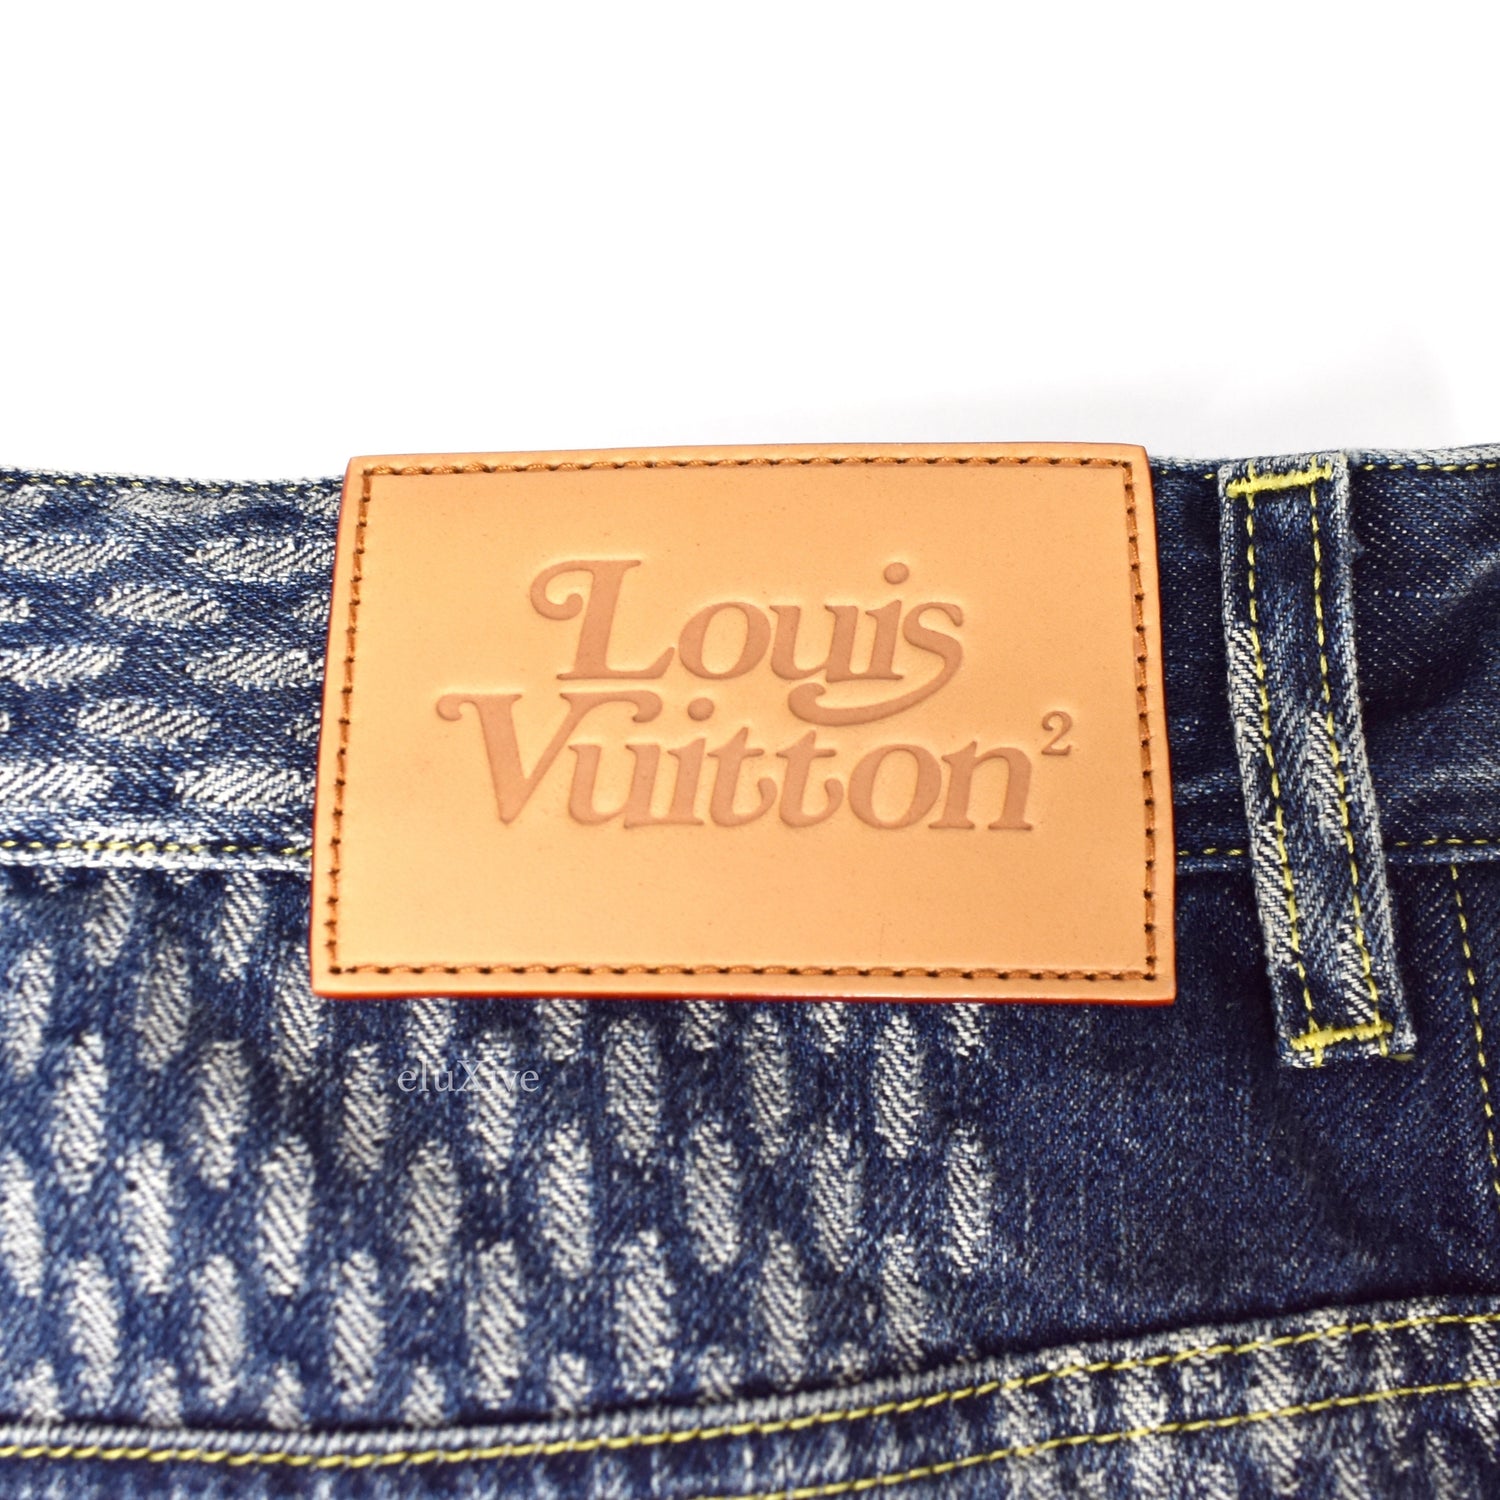 Louis Vuitton (LV) x Nigo jeans (denim pant) - Cloyad - 379¥ : r